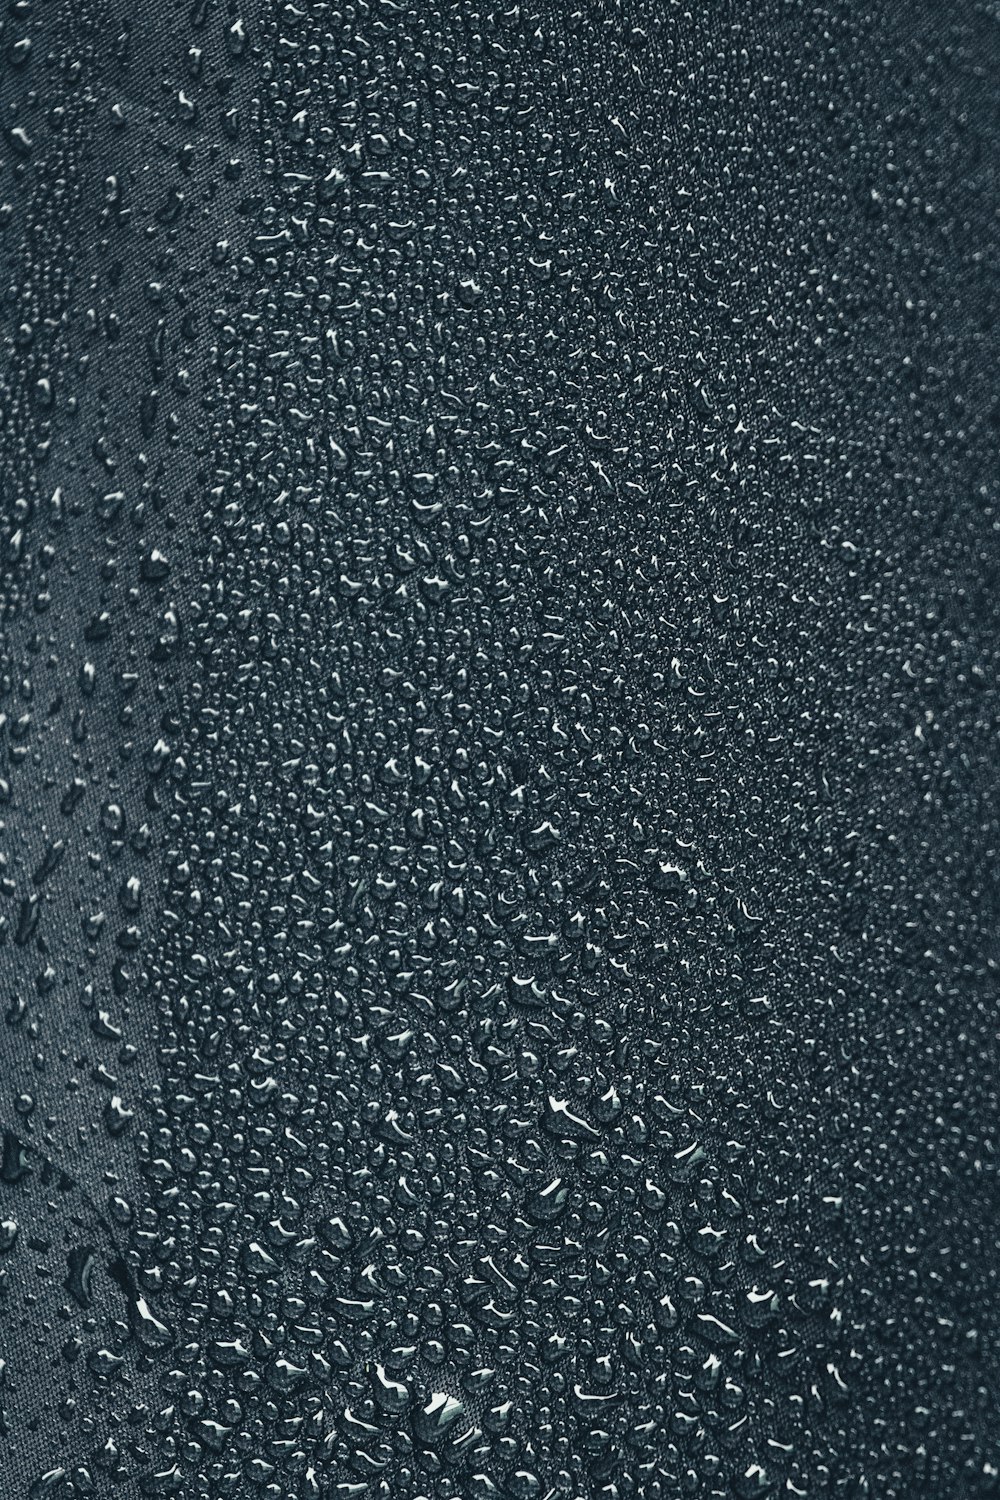 black and white polka dot textile photo – Free Texture Image on Unsplash